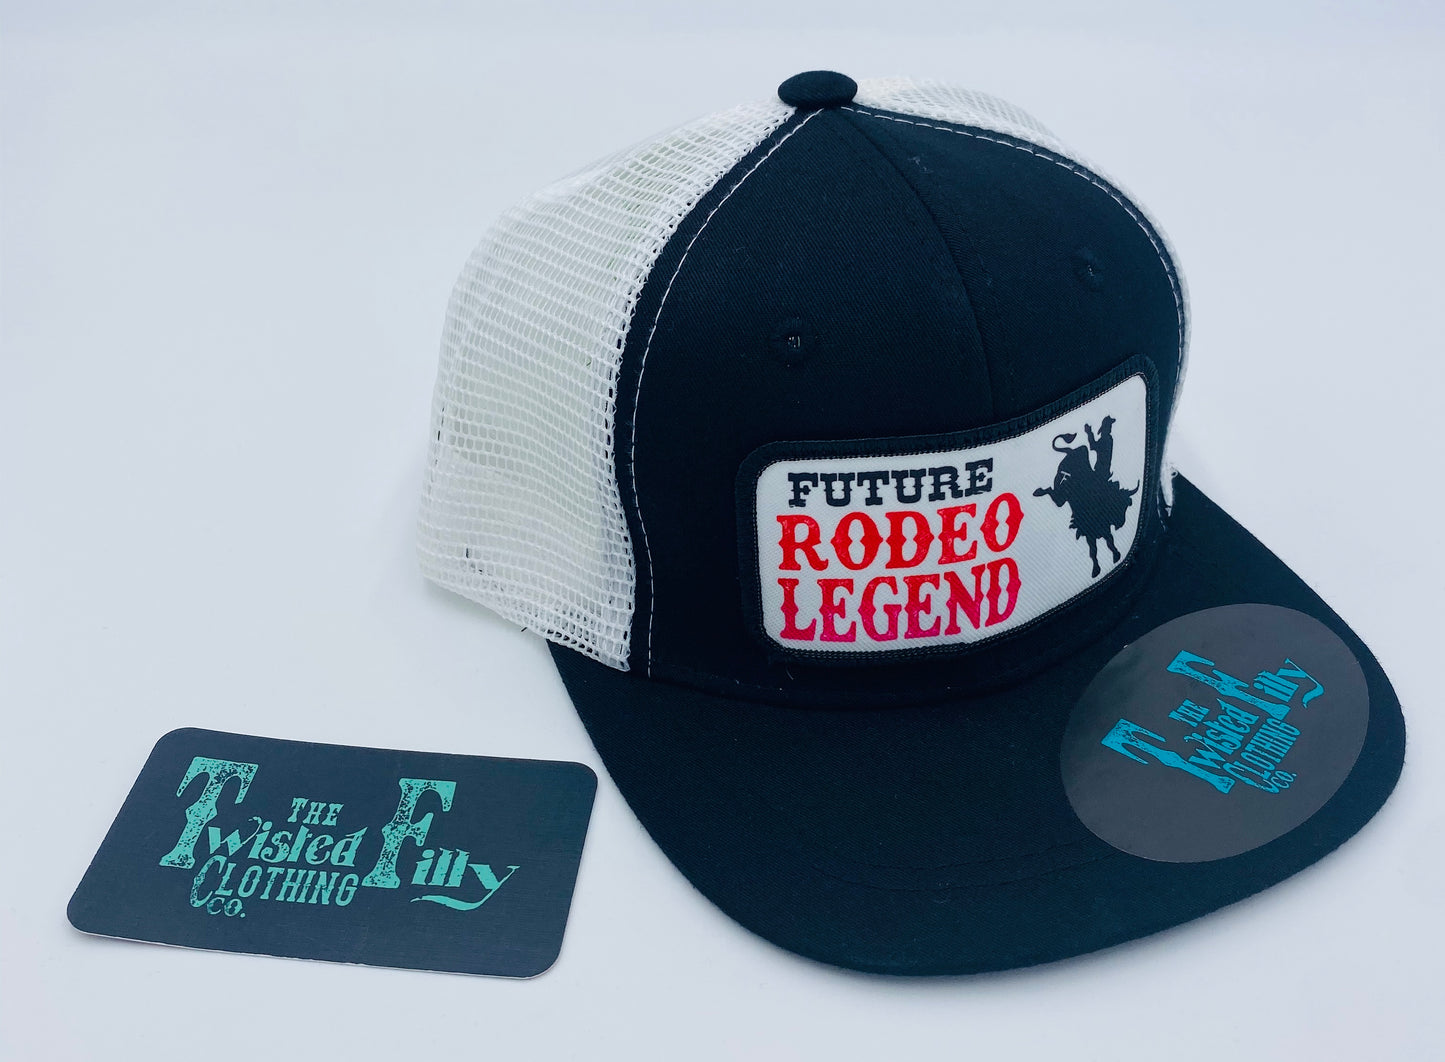 Future Rodeo Legend Bull Rider - Infant / Toddler Trucker Hat - Blk/Wht